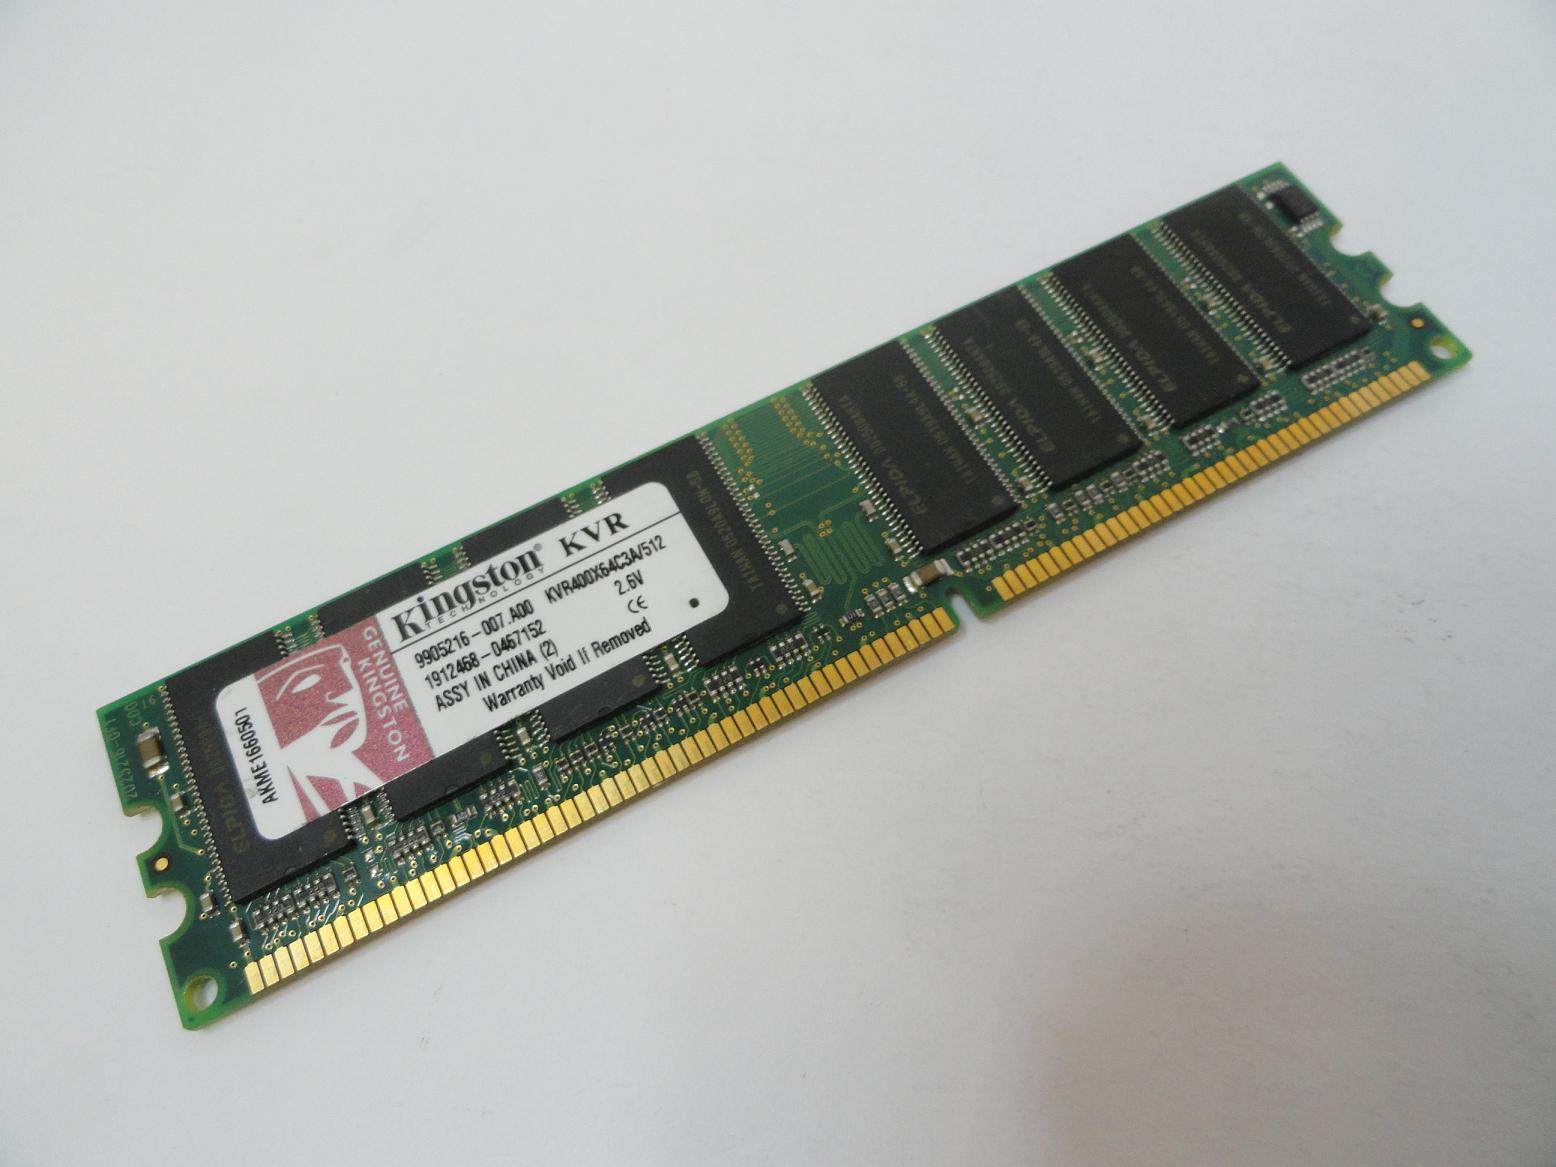 9905216-007.A00 - Kingston ValueRAM 512MB PC3200 DDR-400MHz non-ECC Unbuffered CL3 184-Pin DIMM Memory - Refurbished